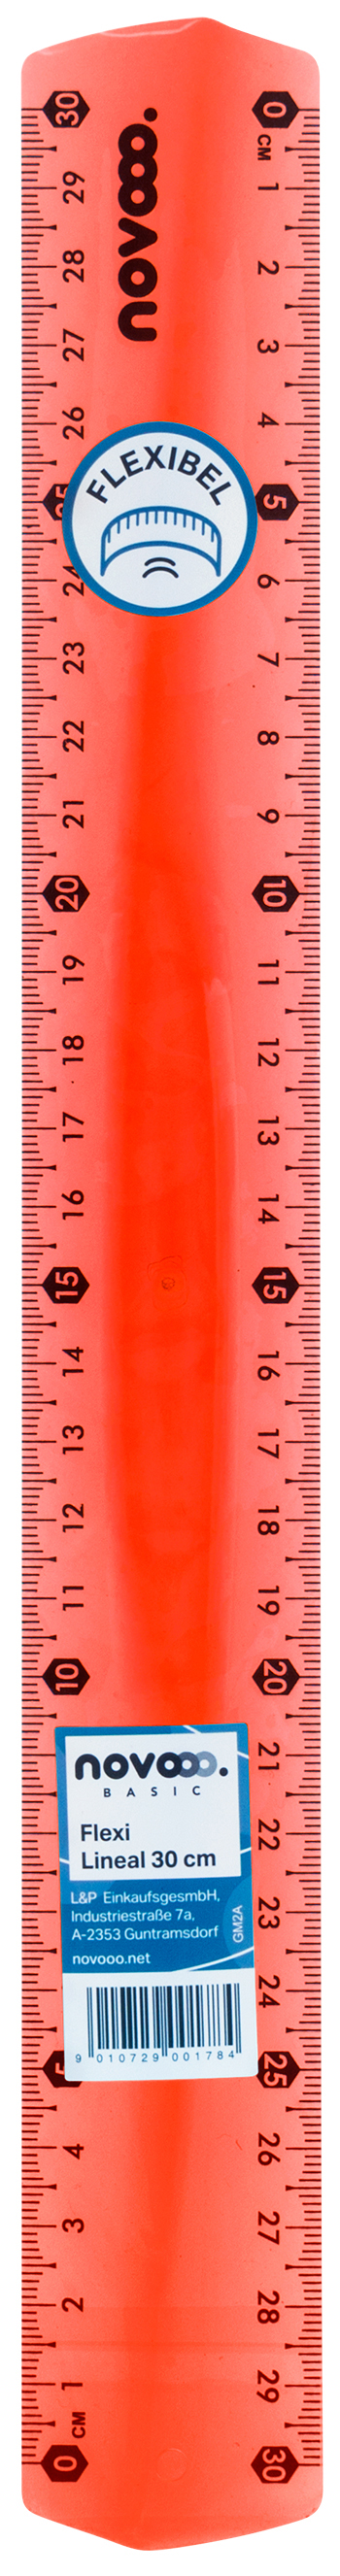 NOVOOO Basic Flexi Lineal 30 cm farblich sortiert